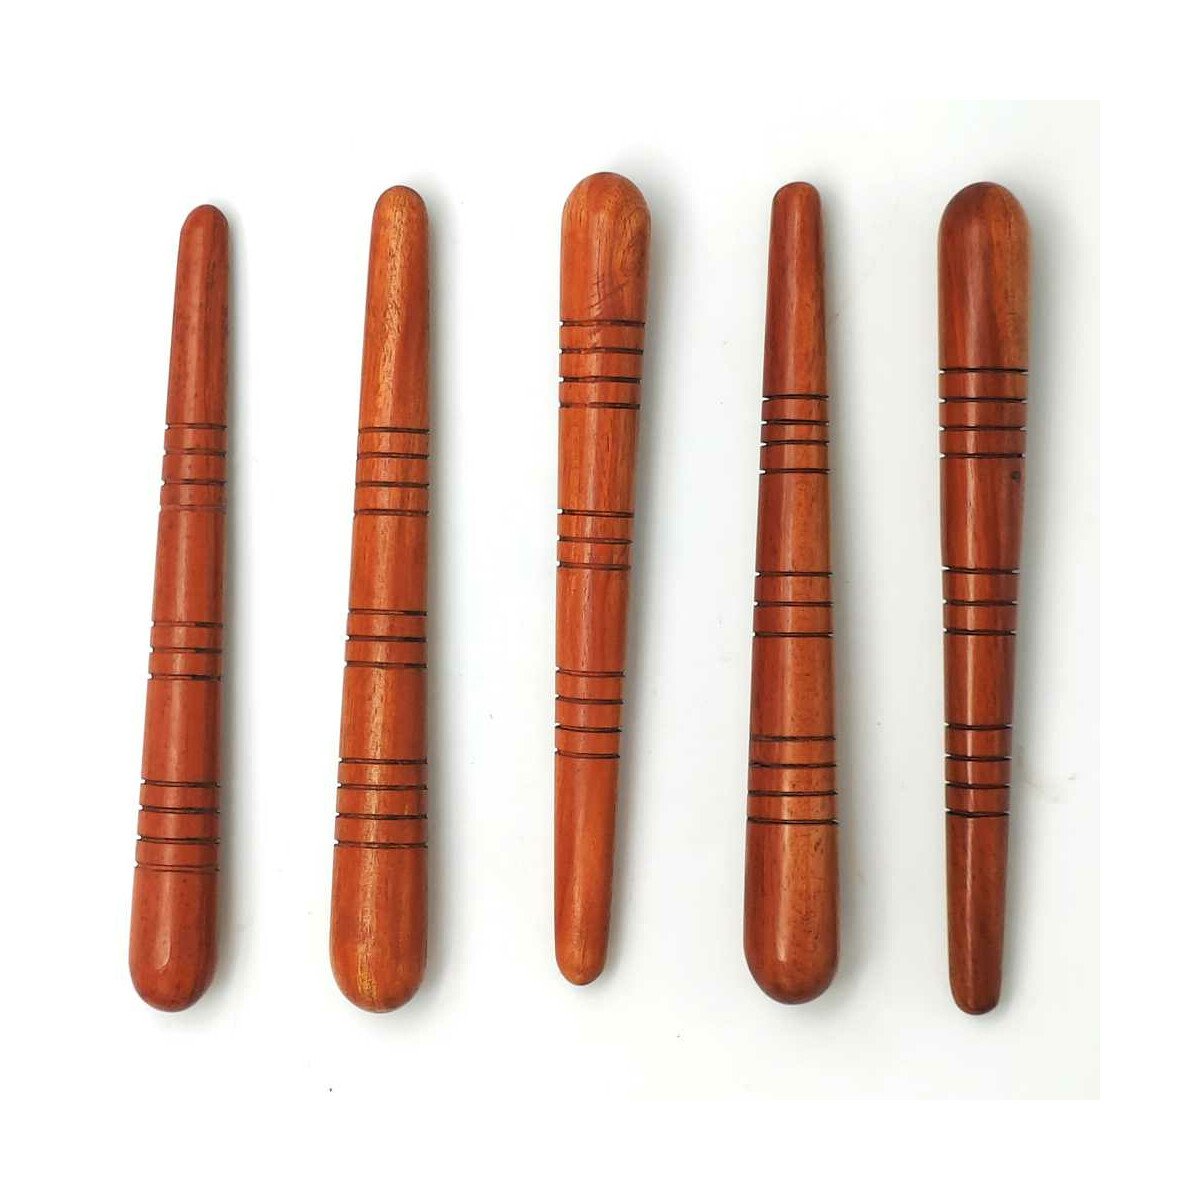 5 pcs. Wooden Massage Stick